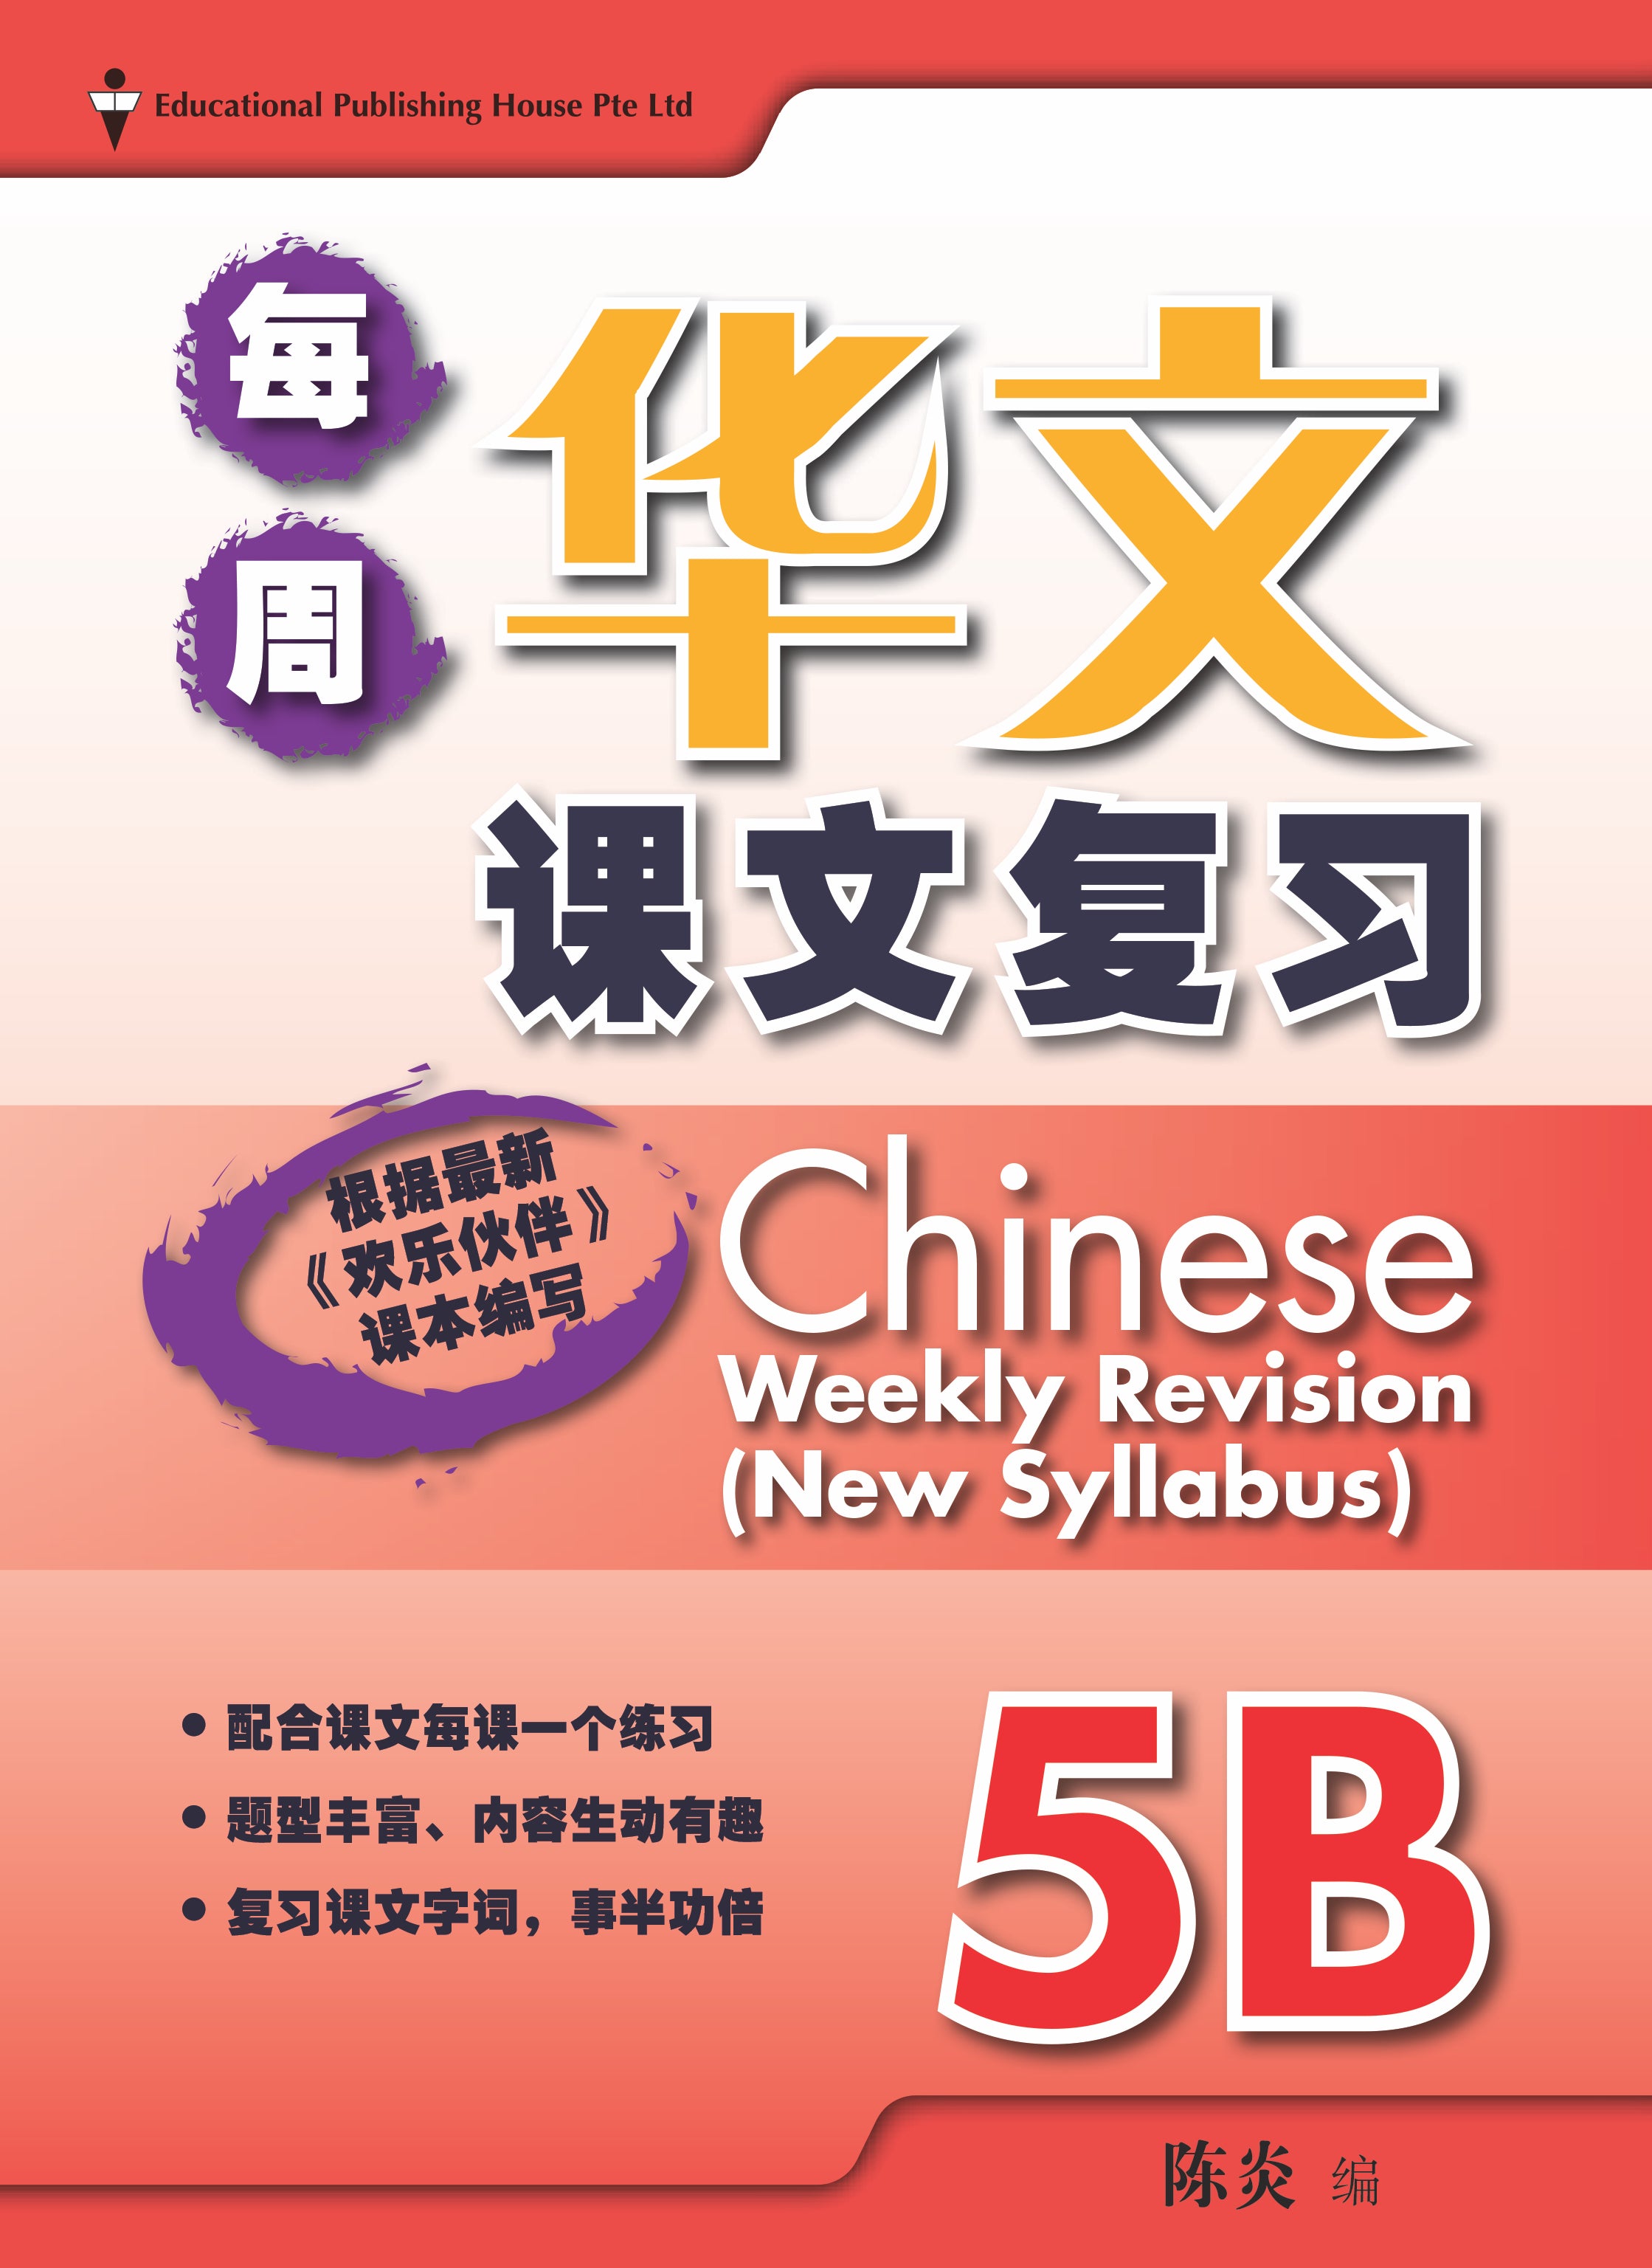 Primary 5B Chinese Weekly Revision 每周华文课文复习 - _MS, BASIC, CHINESE, EDUCATIONAL PUBLISHING HOUSE, PRIMARY 5